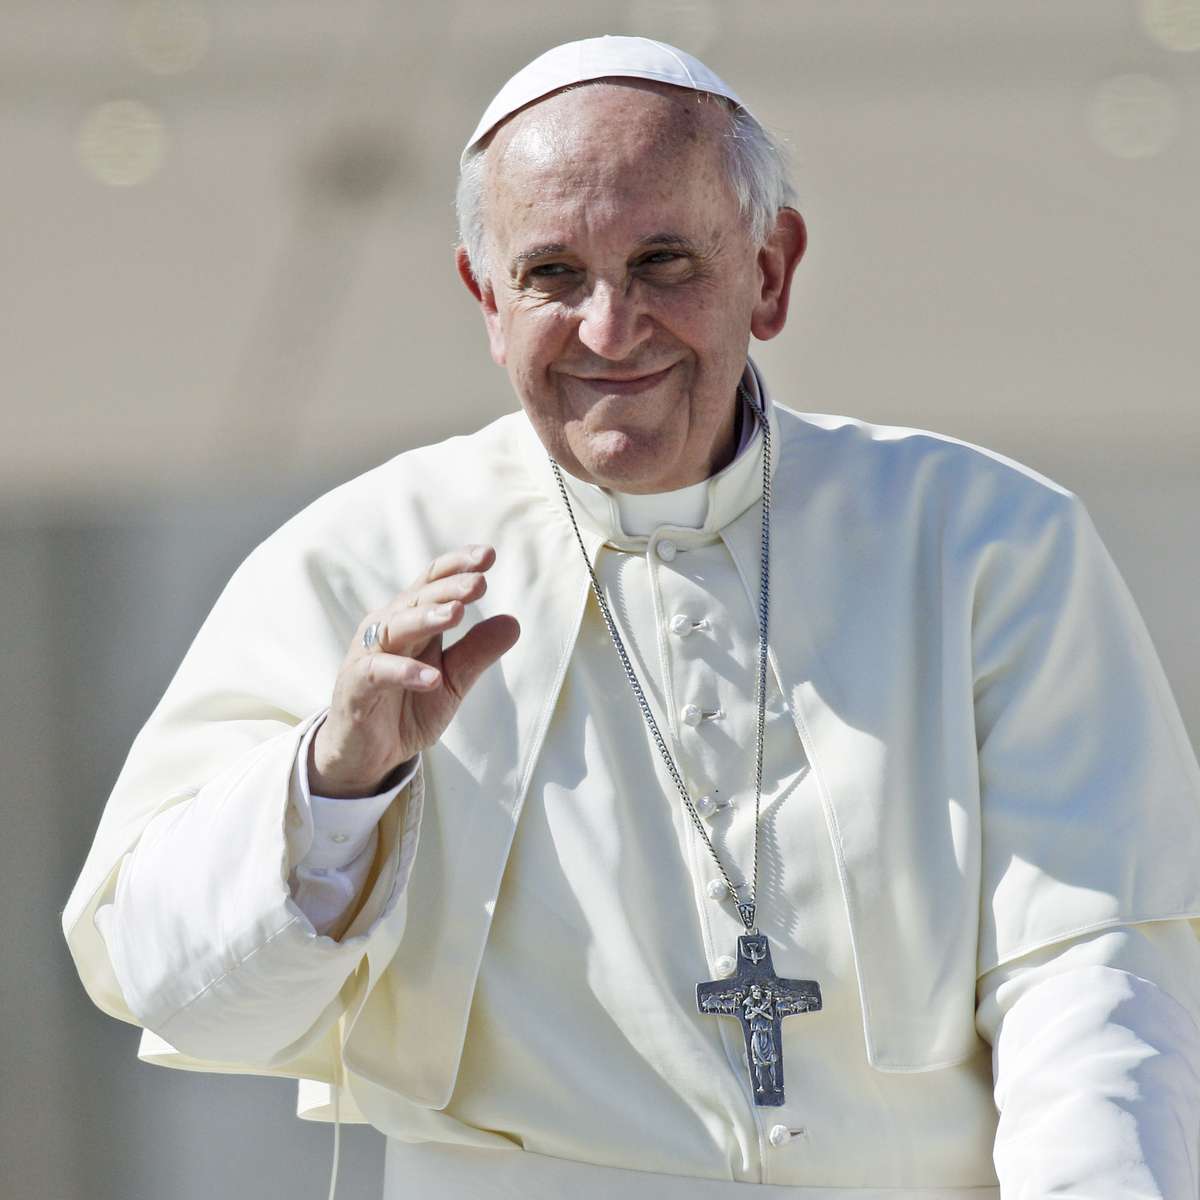 Papa Francisco supera 15 milhões de seguidores no Twitter